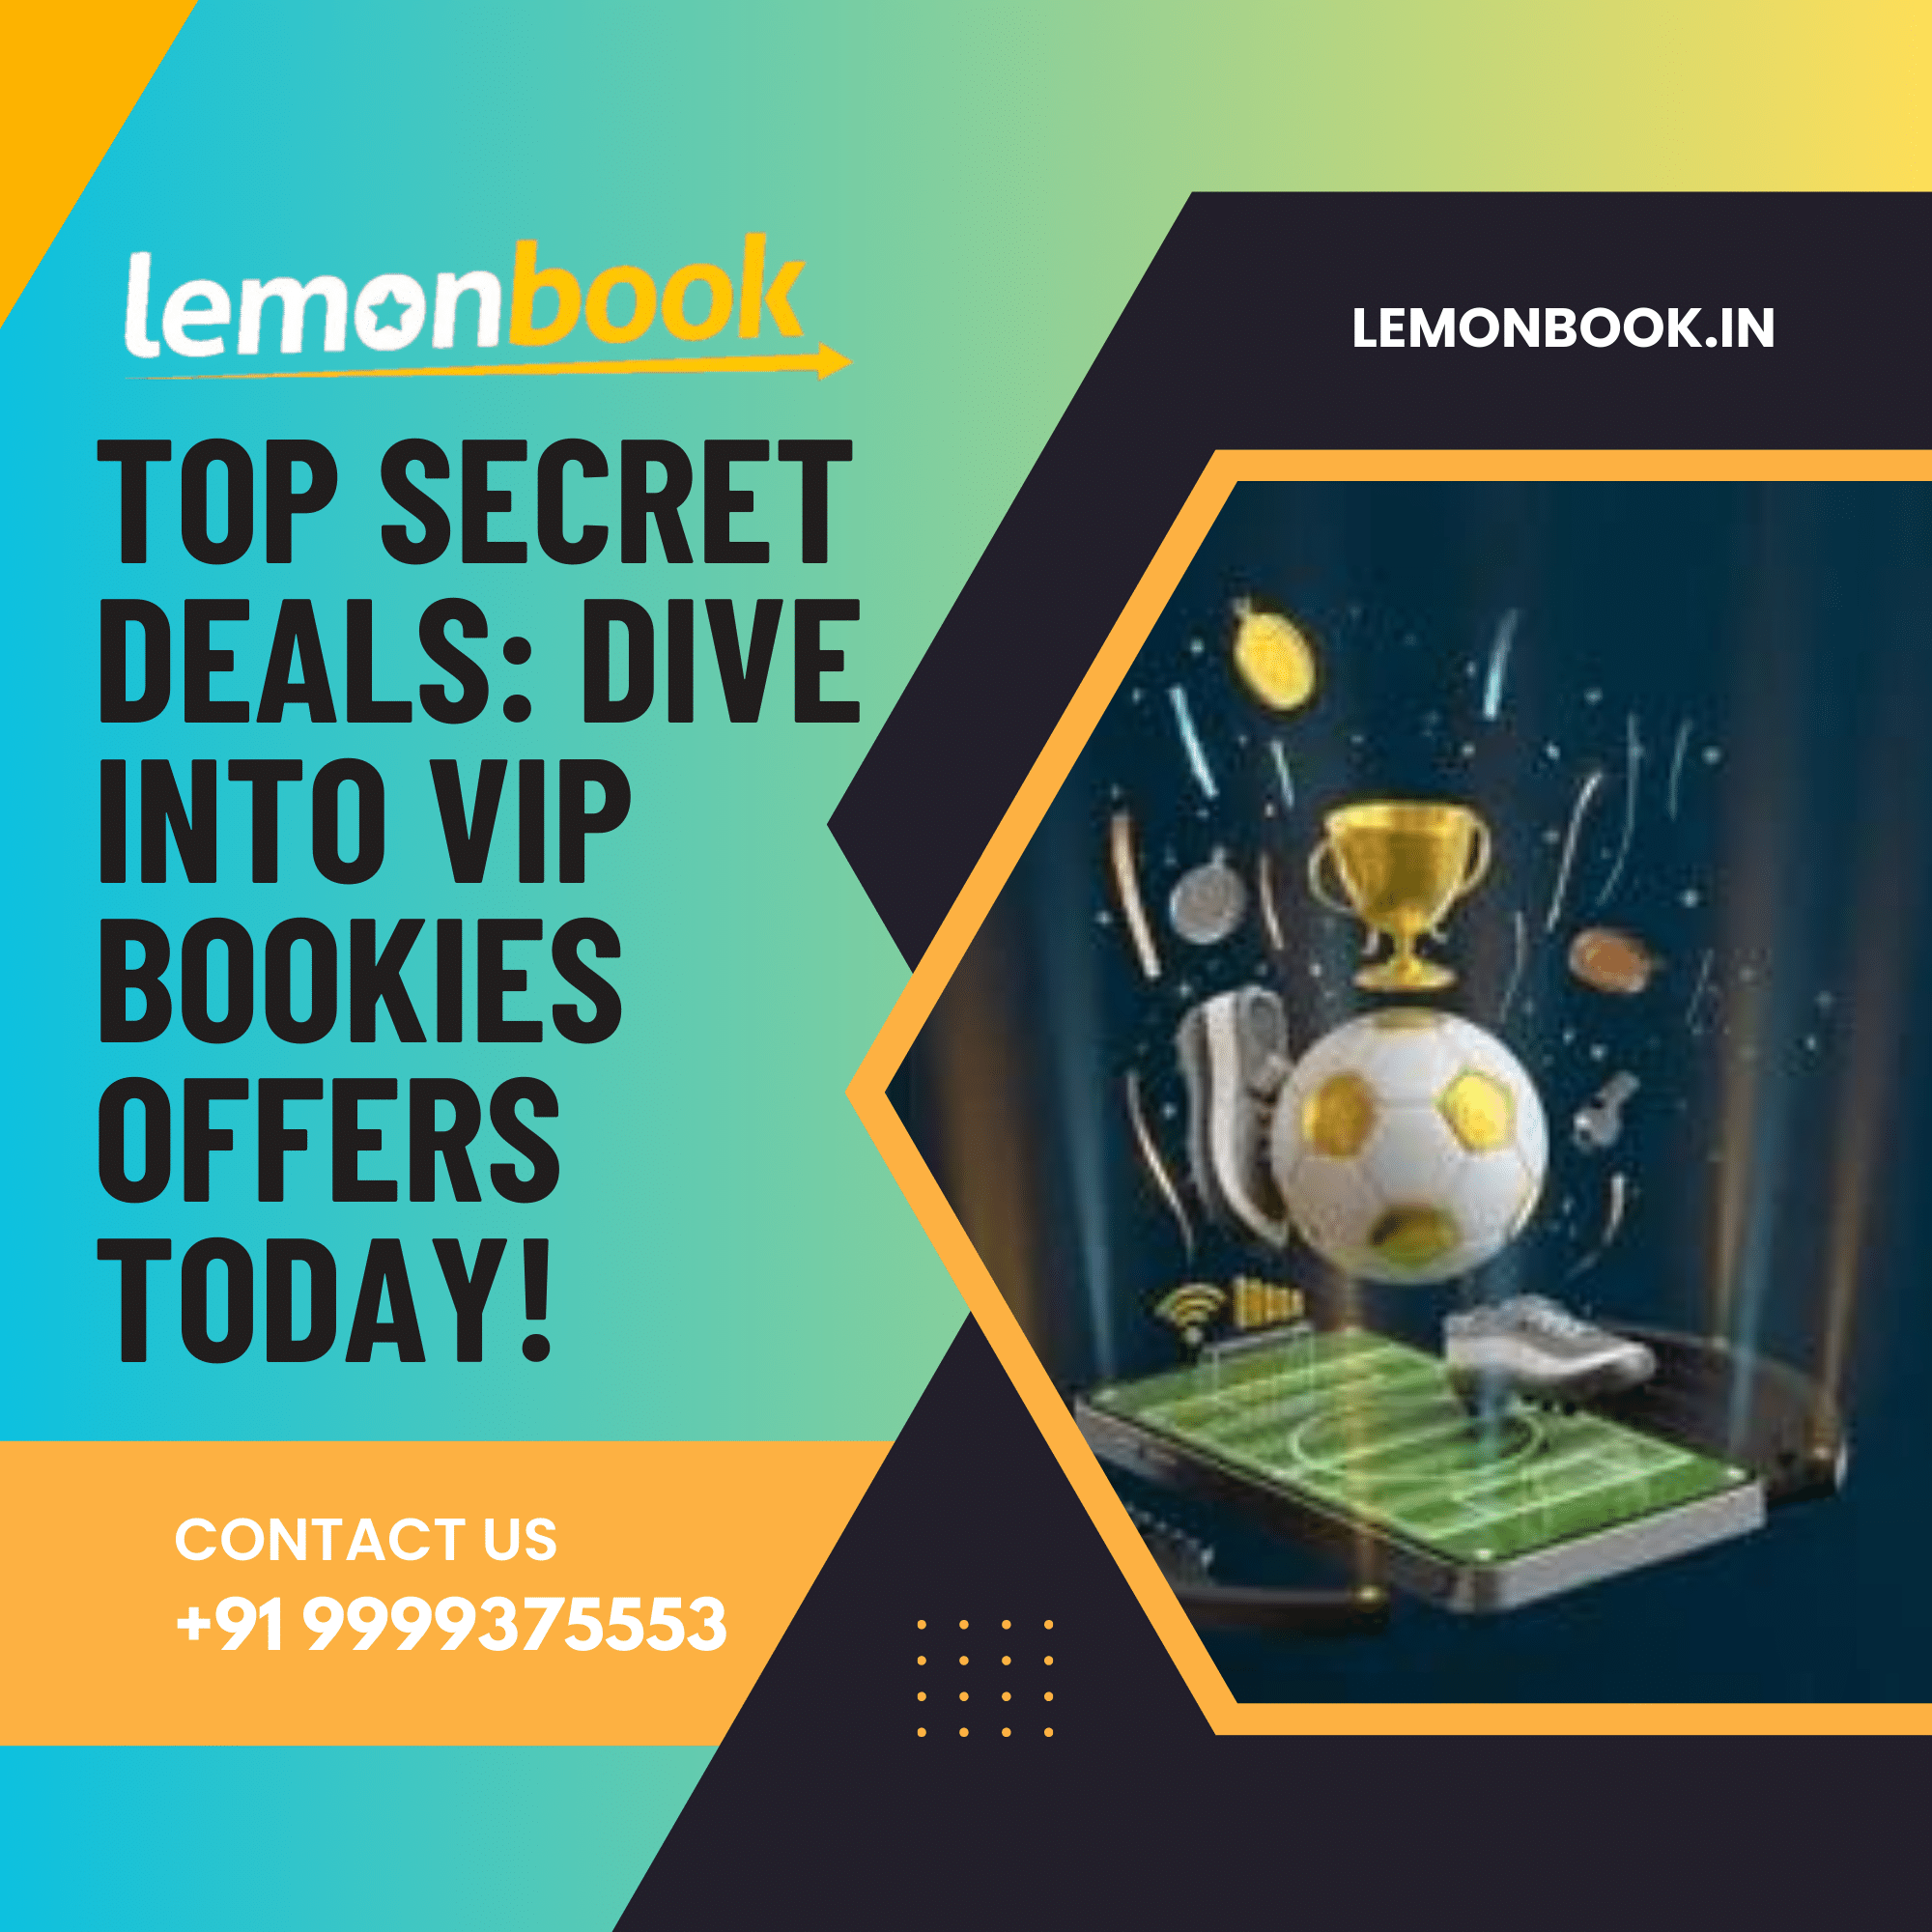 Top Secret Deals - Dive into VIP Bookies Offers Today!